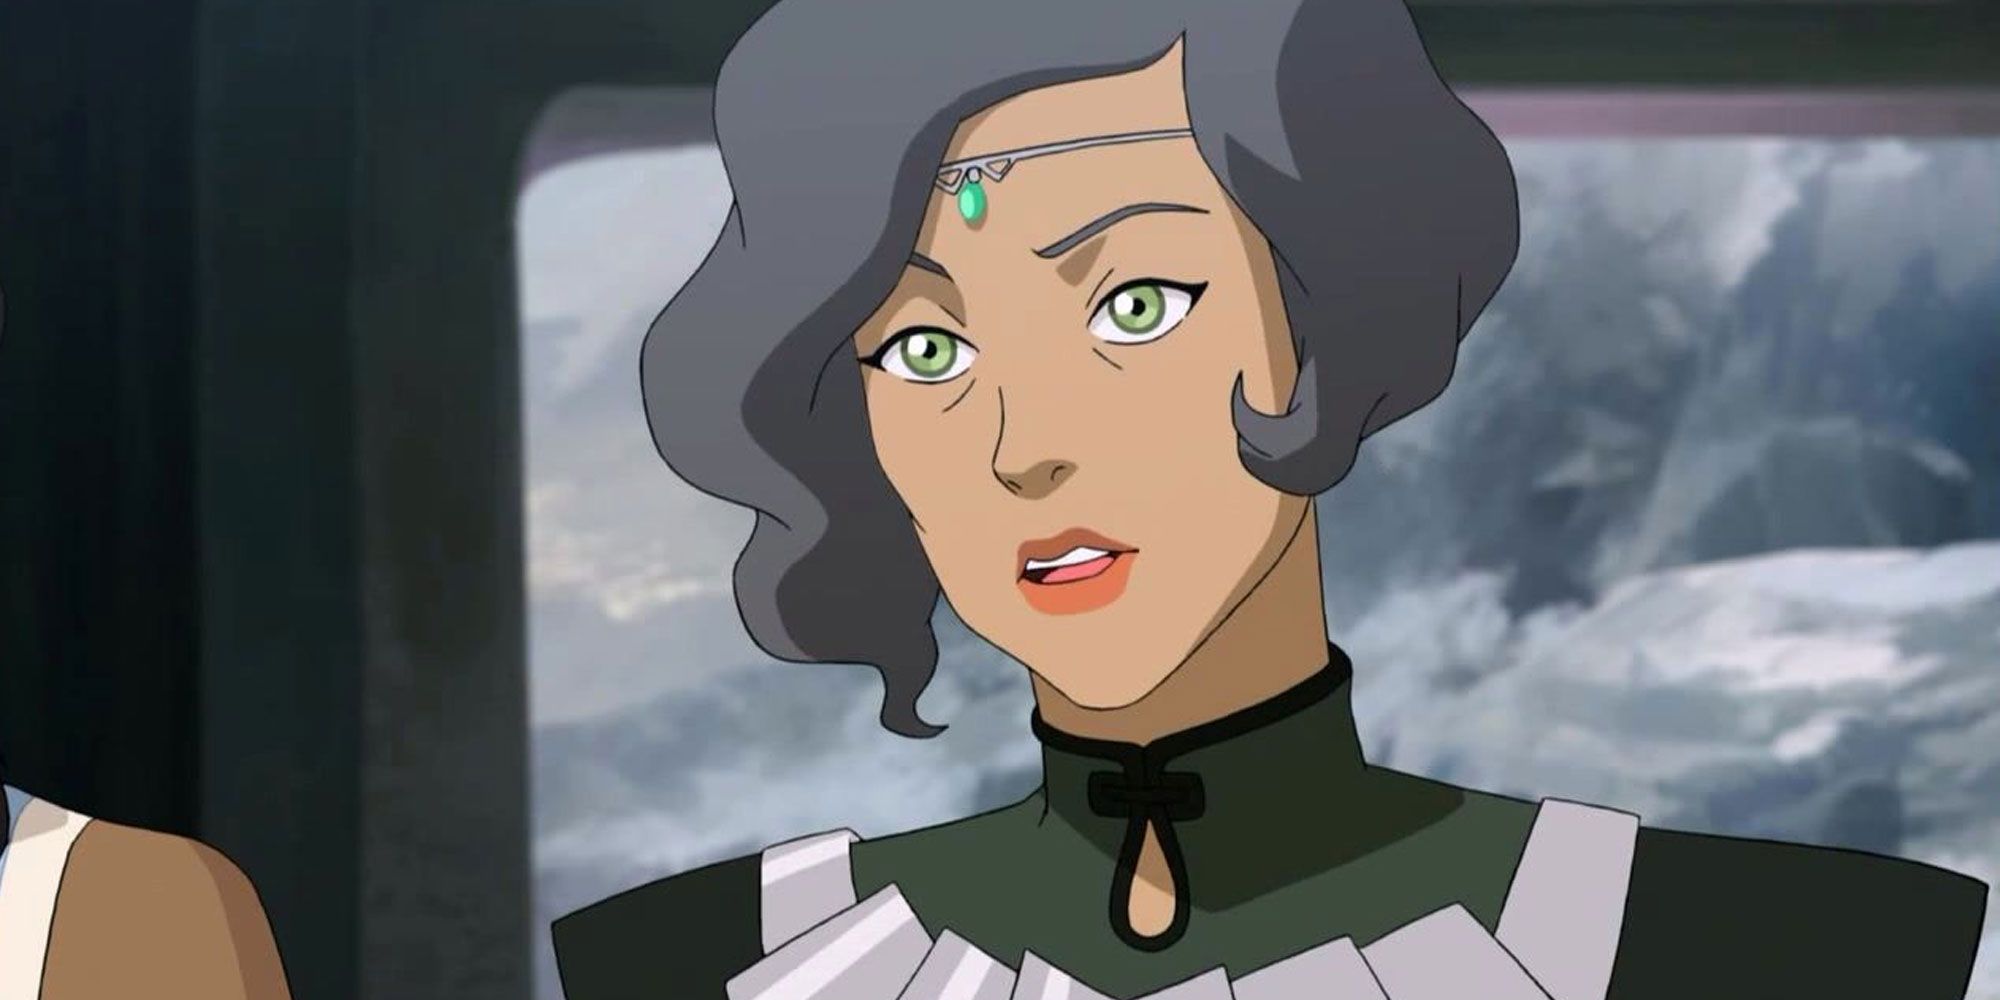 Suyin tilts her head to the side as she speaks in The Legend of Korra